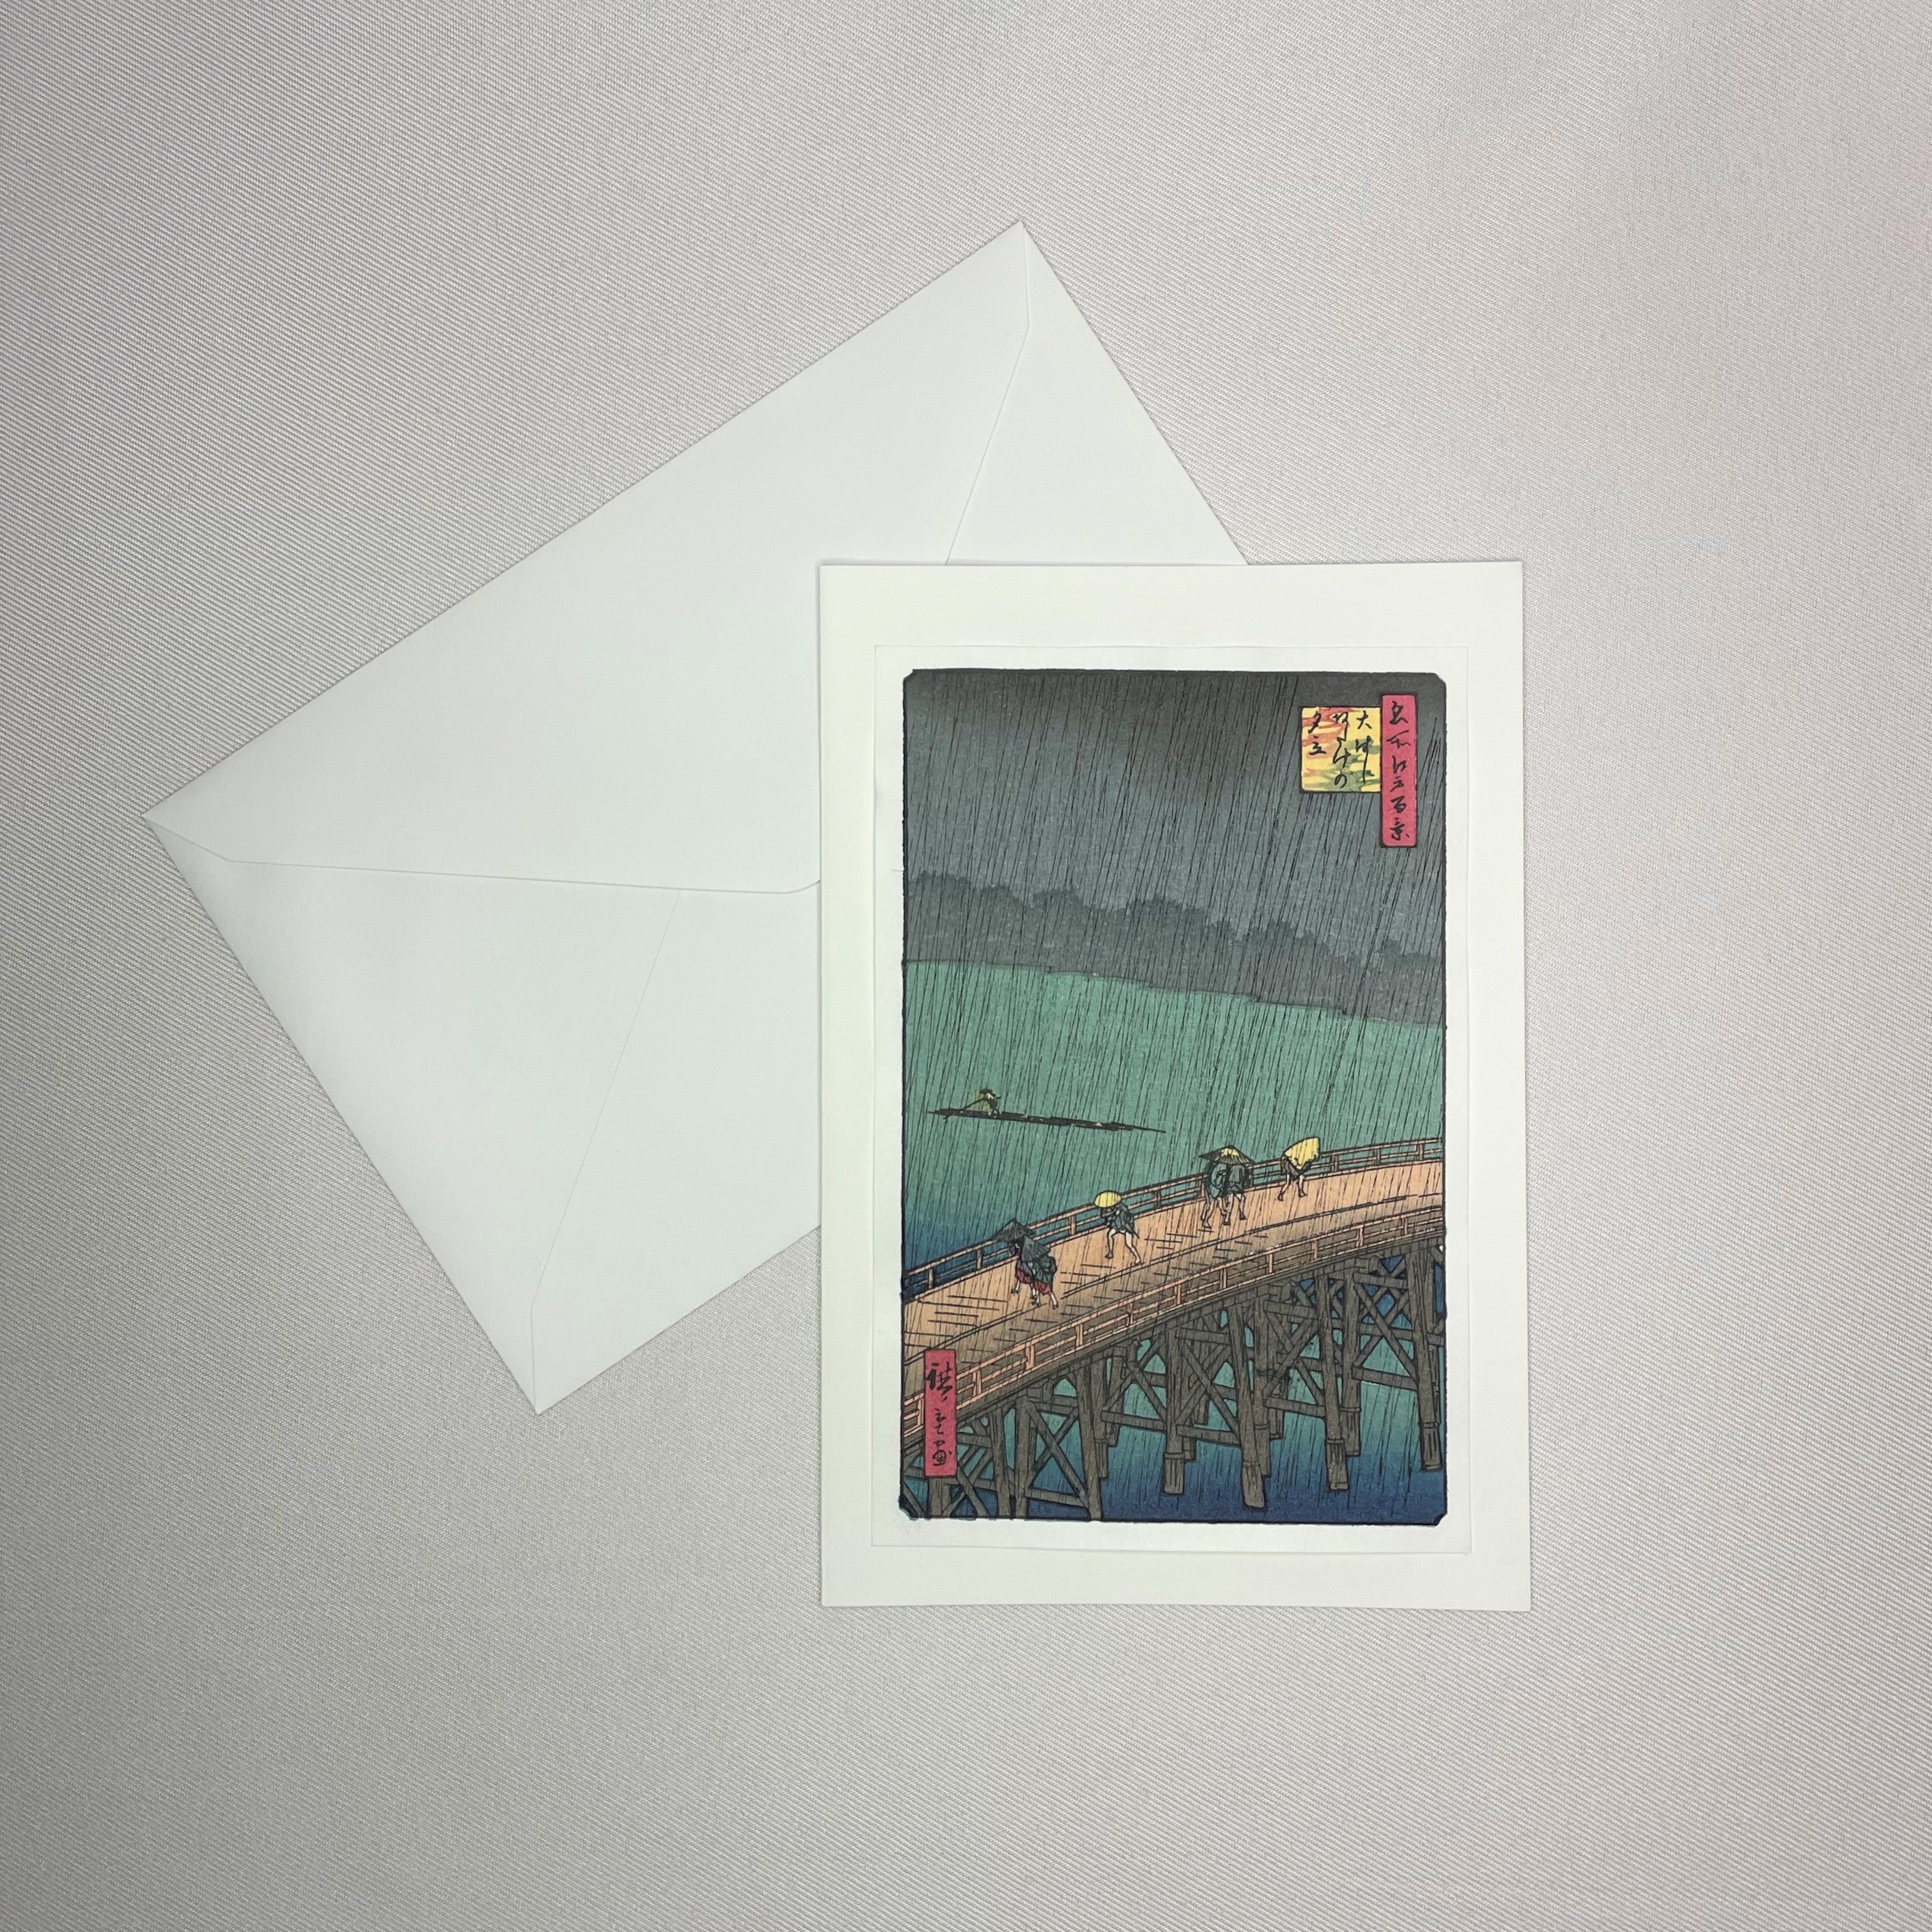 Woodblock Print Post Card (Bridge in the Shower)